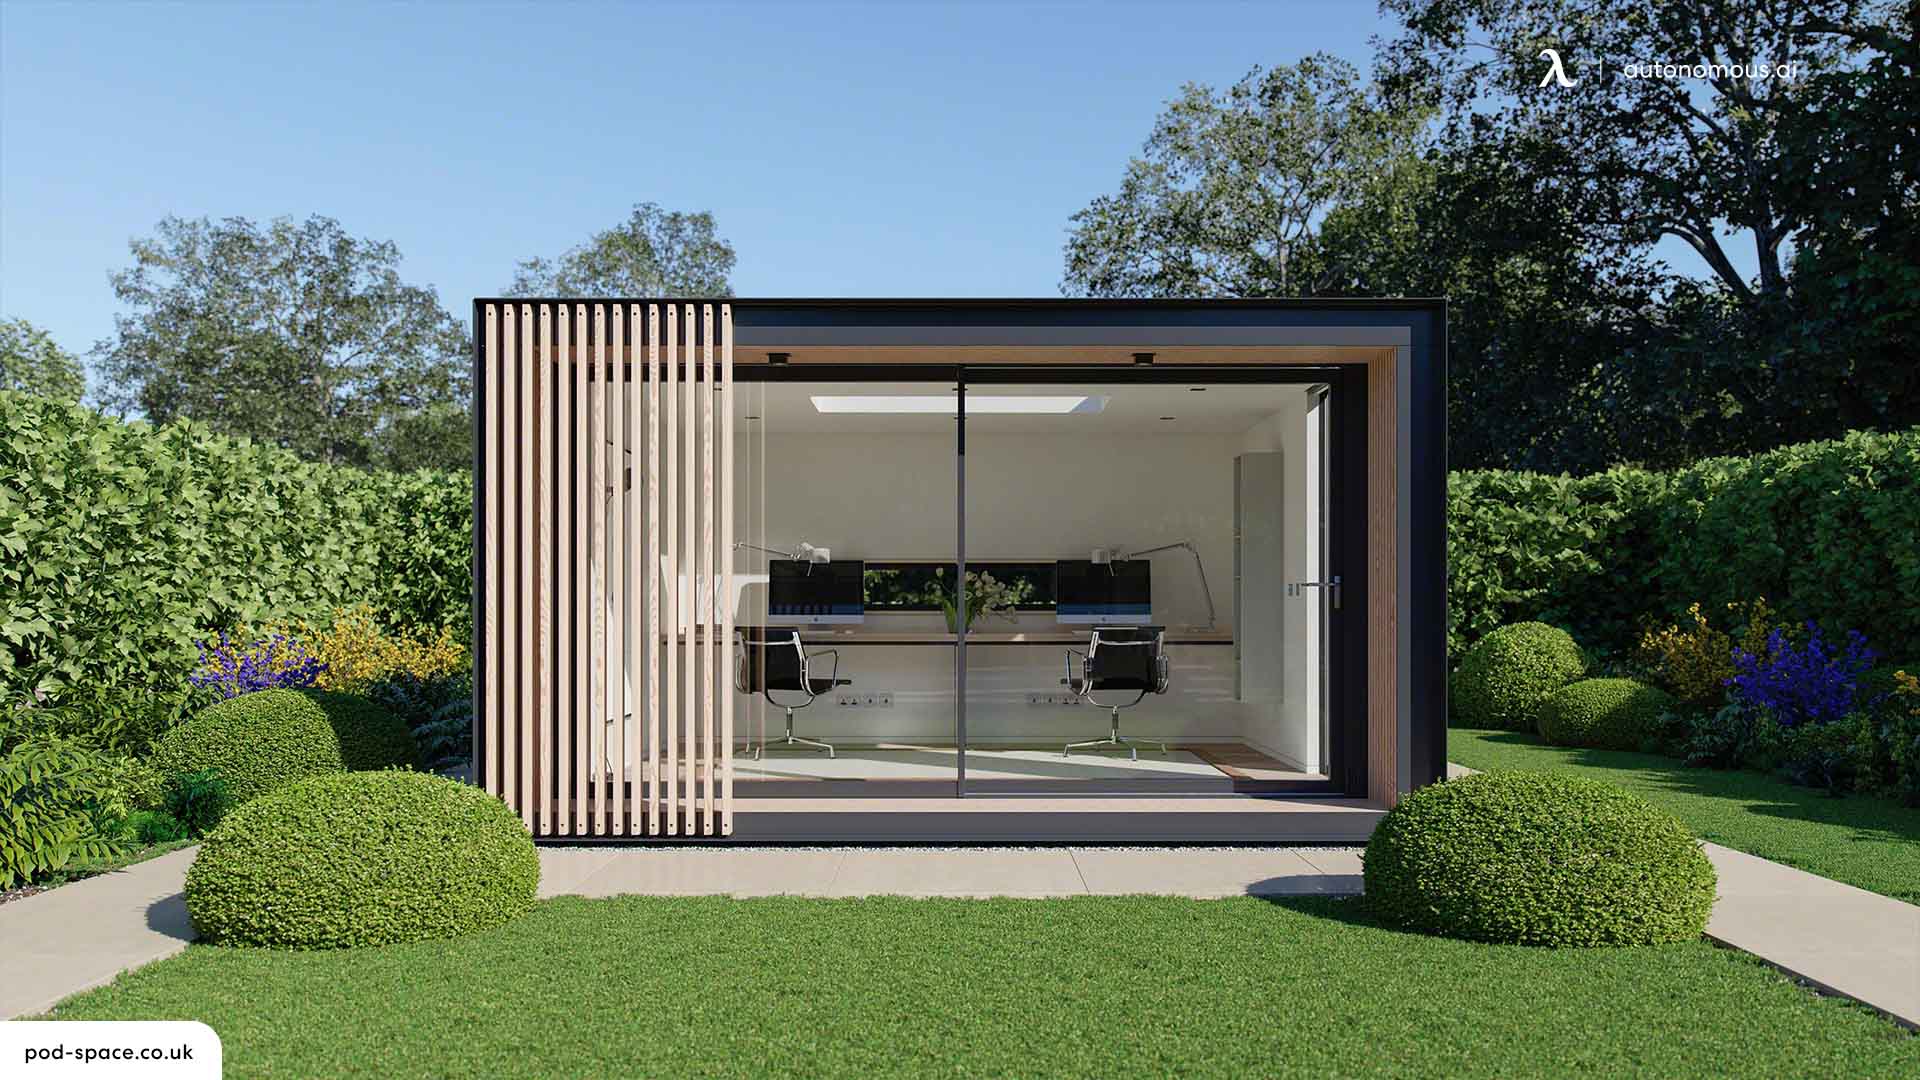 Custom Mini Pod outdoor office shed